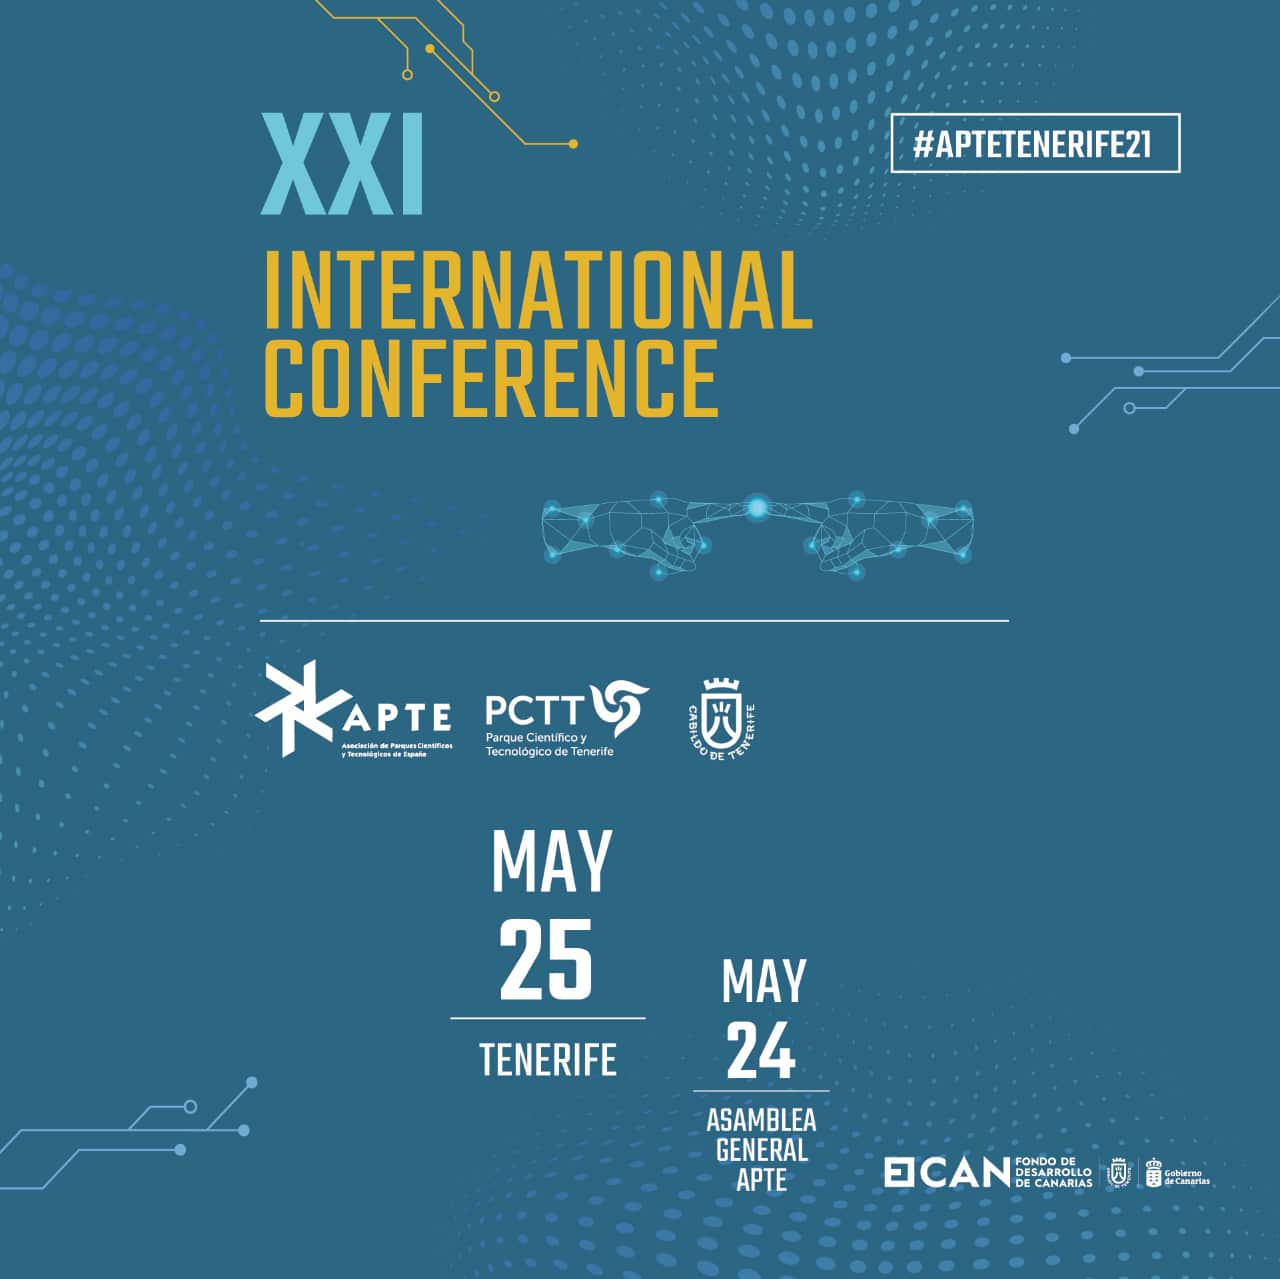 XXI International Conference